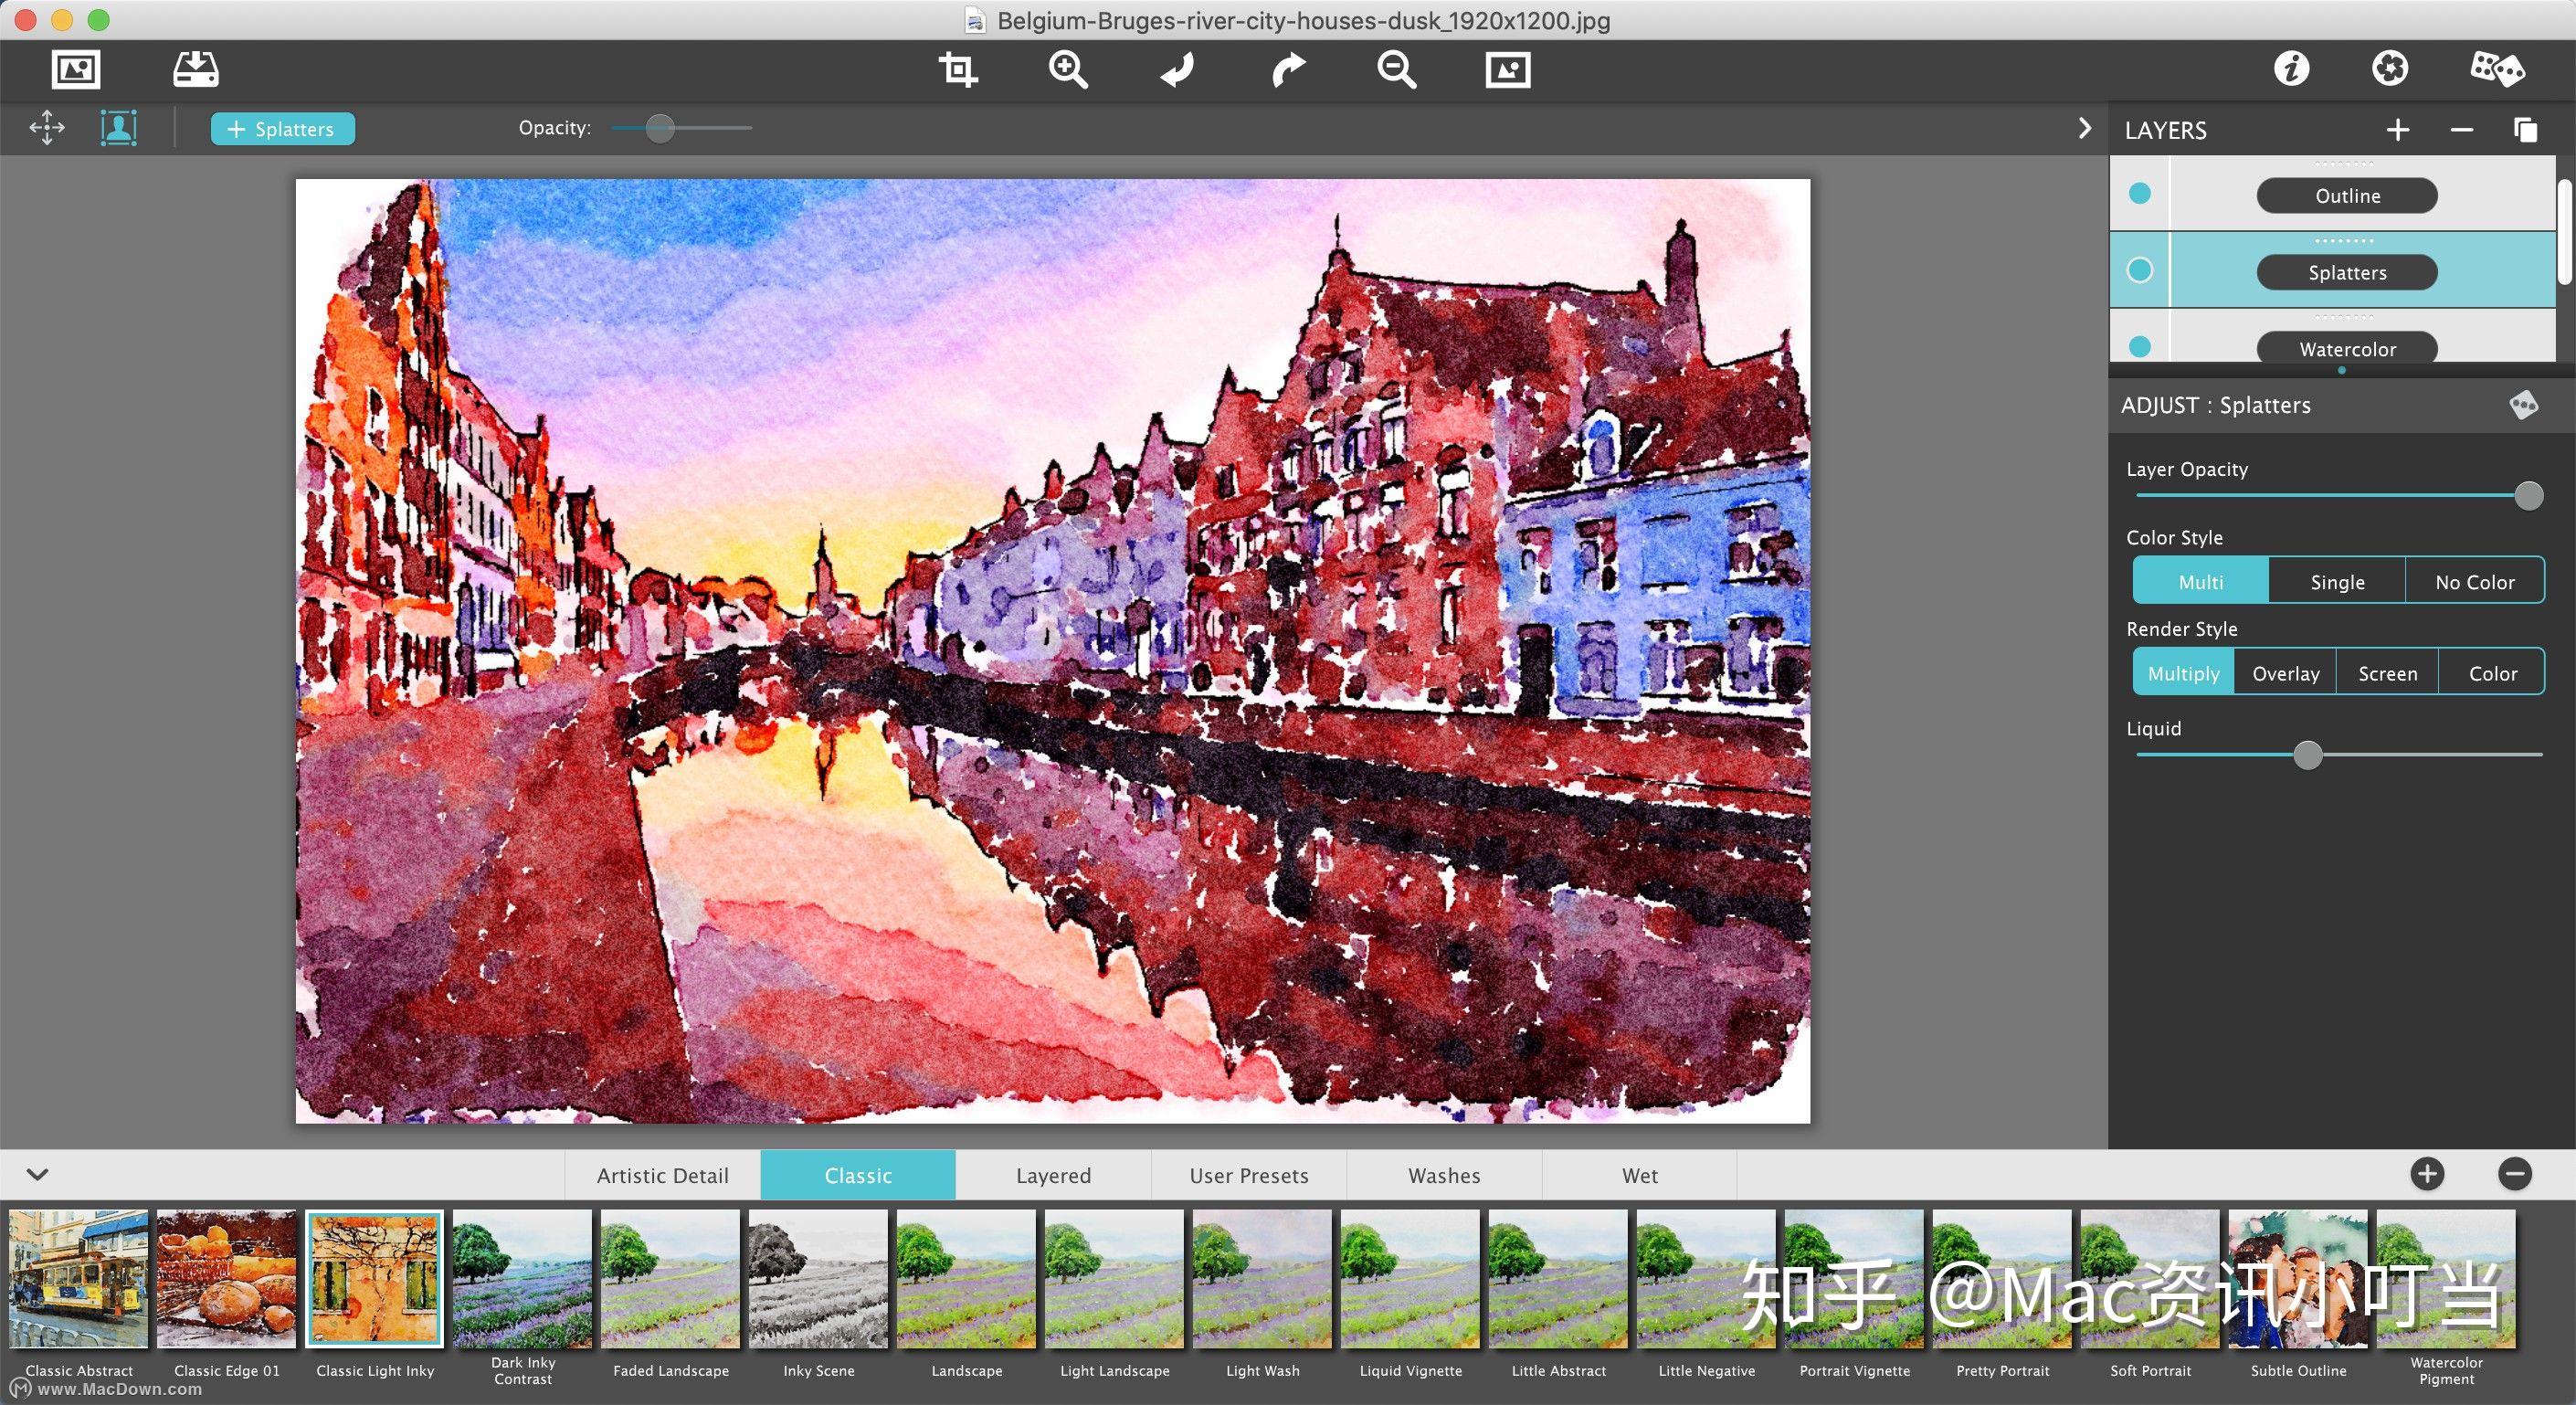 download the last version for windows Jixipix Watercolor Studio 1.4.17